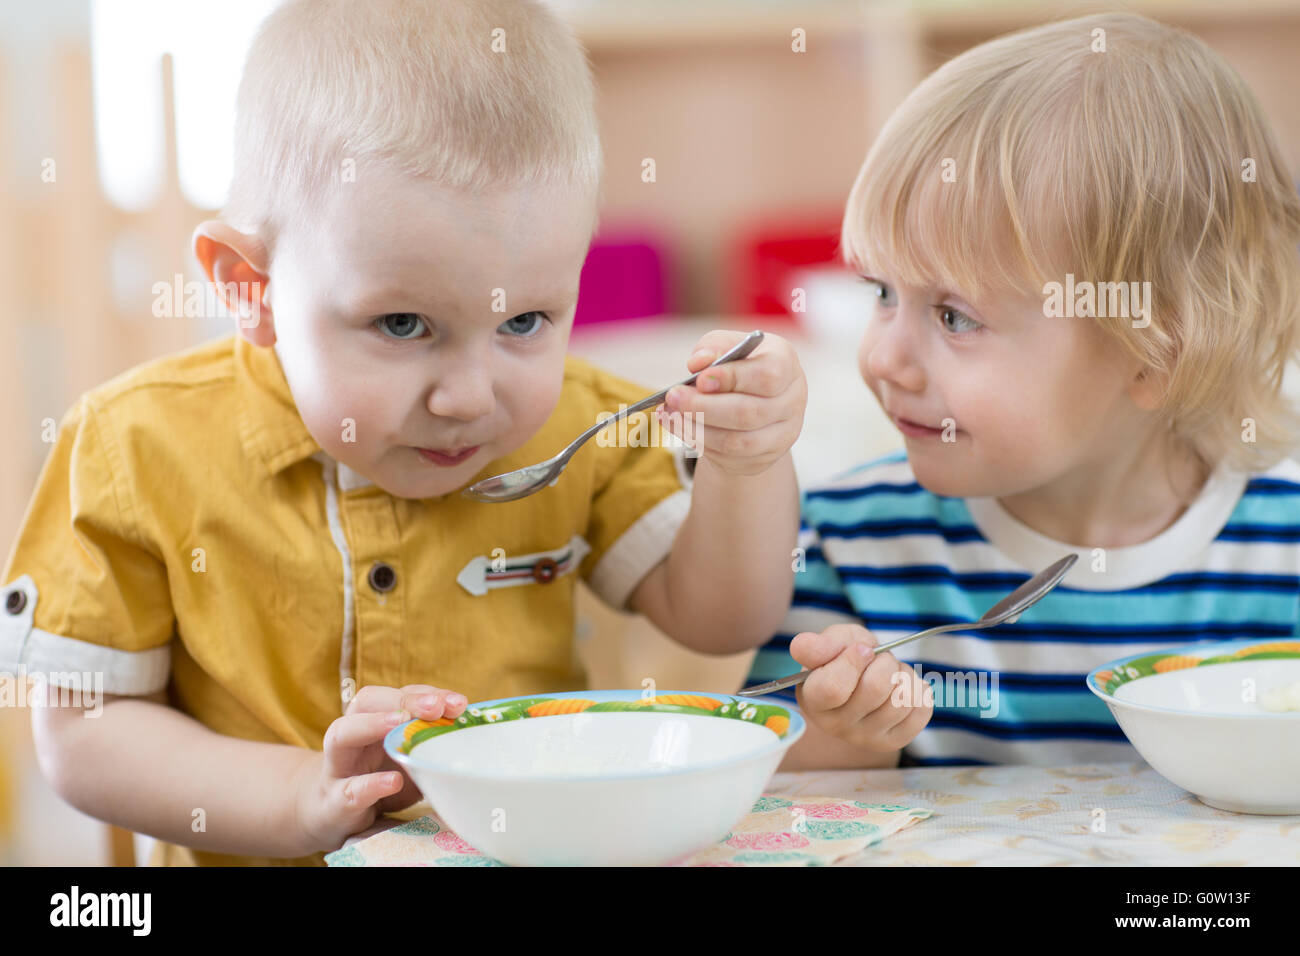 Funny smiling little kid de manger dans le jardin d'enfants Banque D'Images